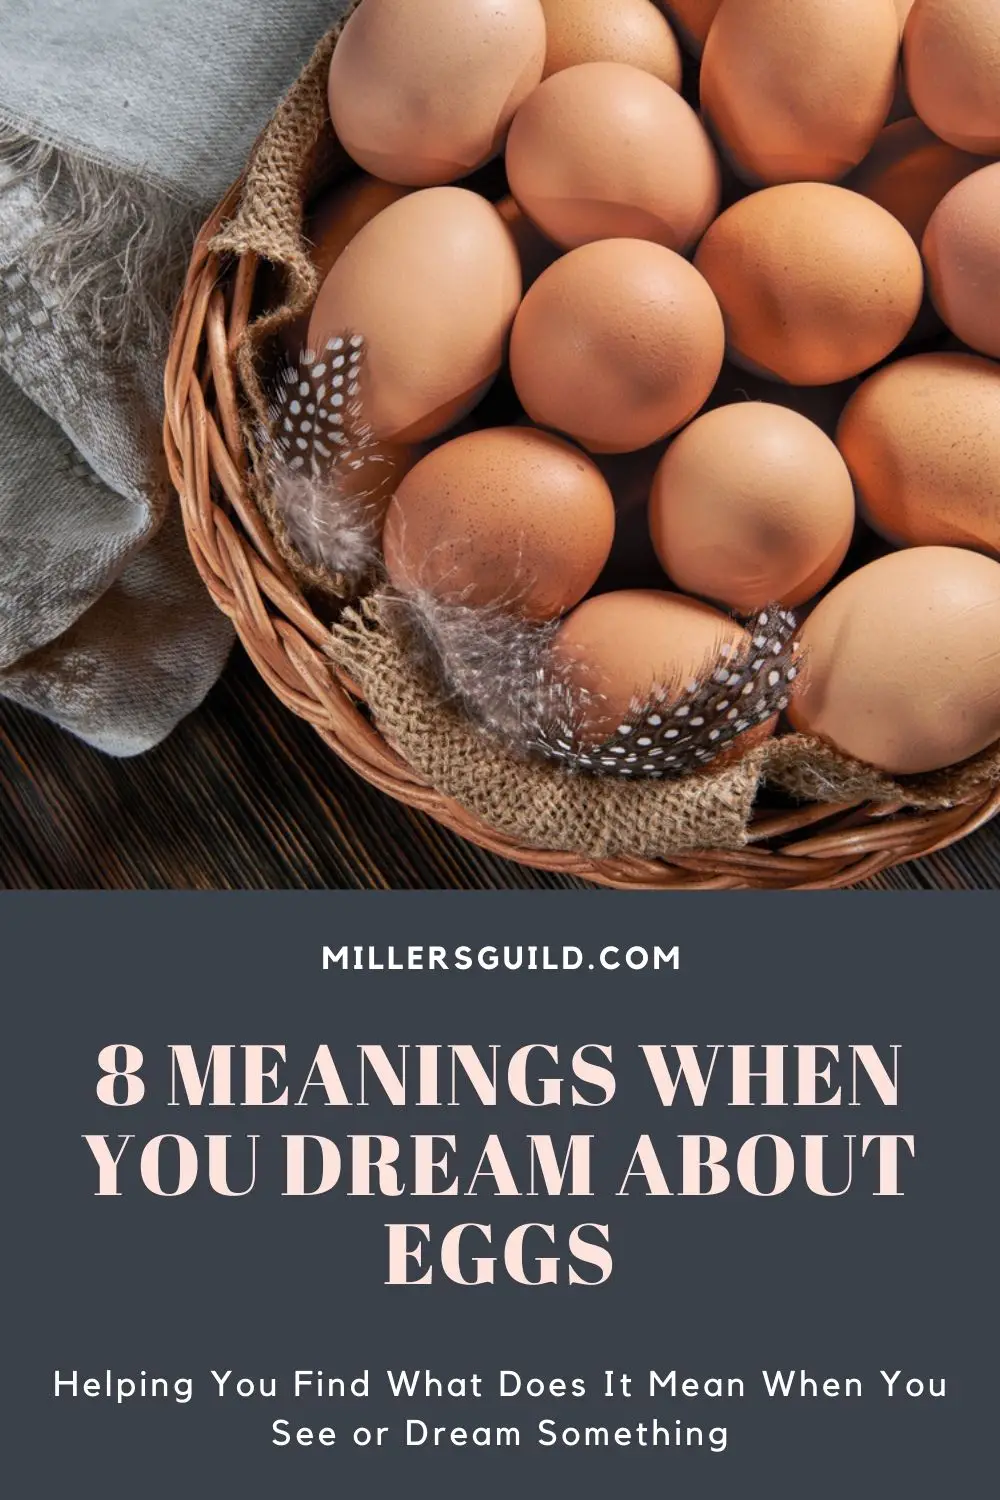 Finding Eggs In Dreams